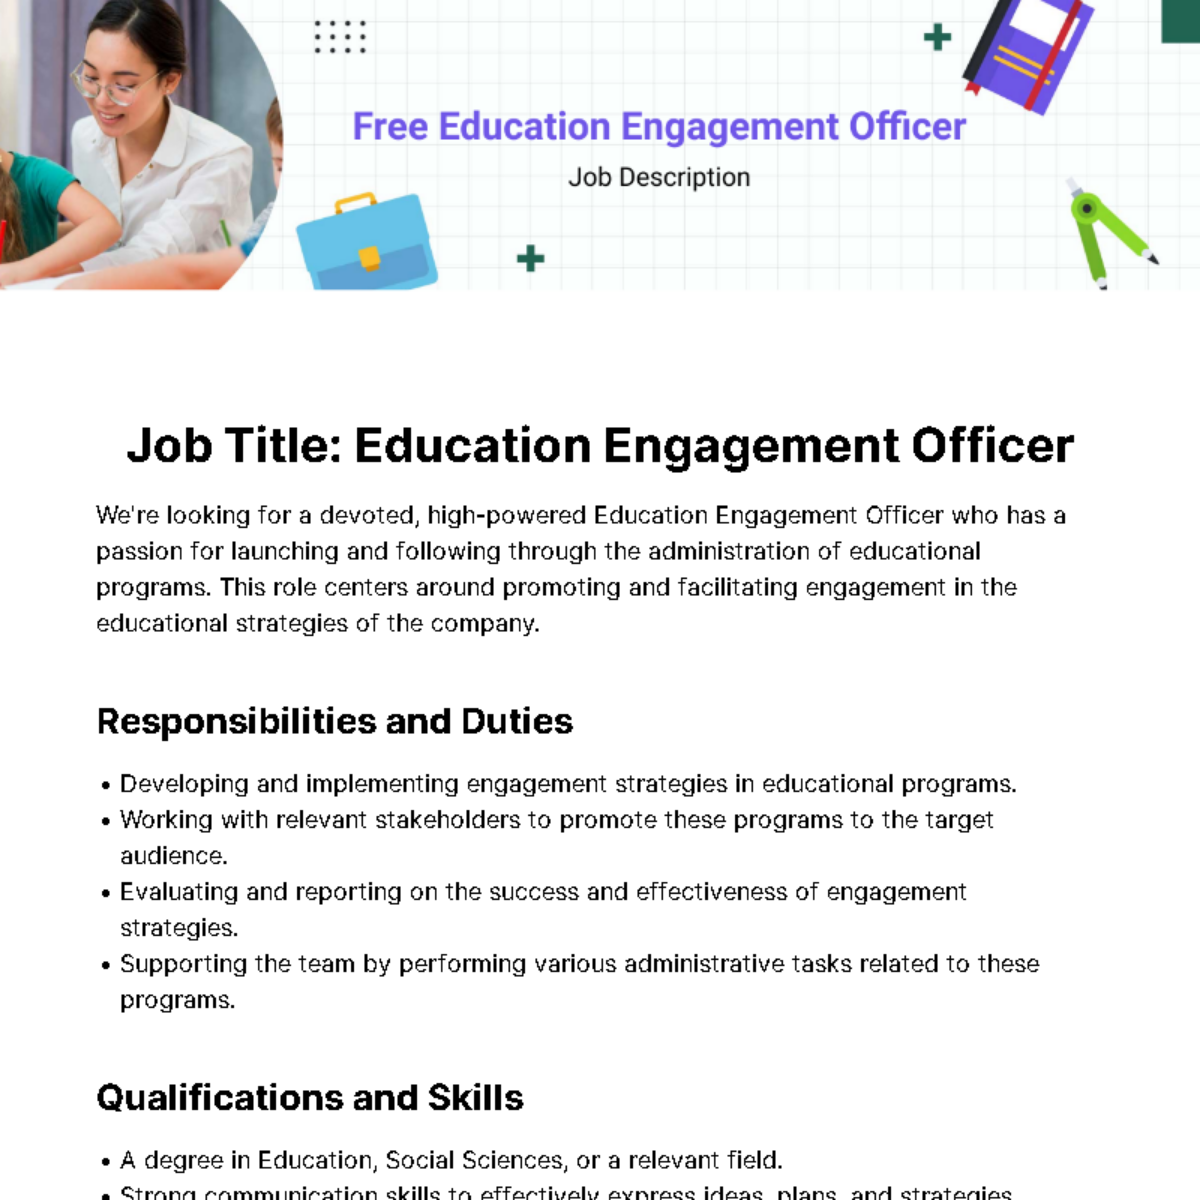 Free Education Engagement Officer Job Description Template